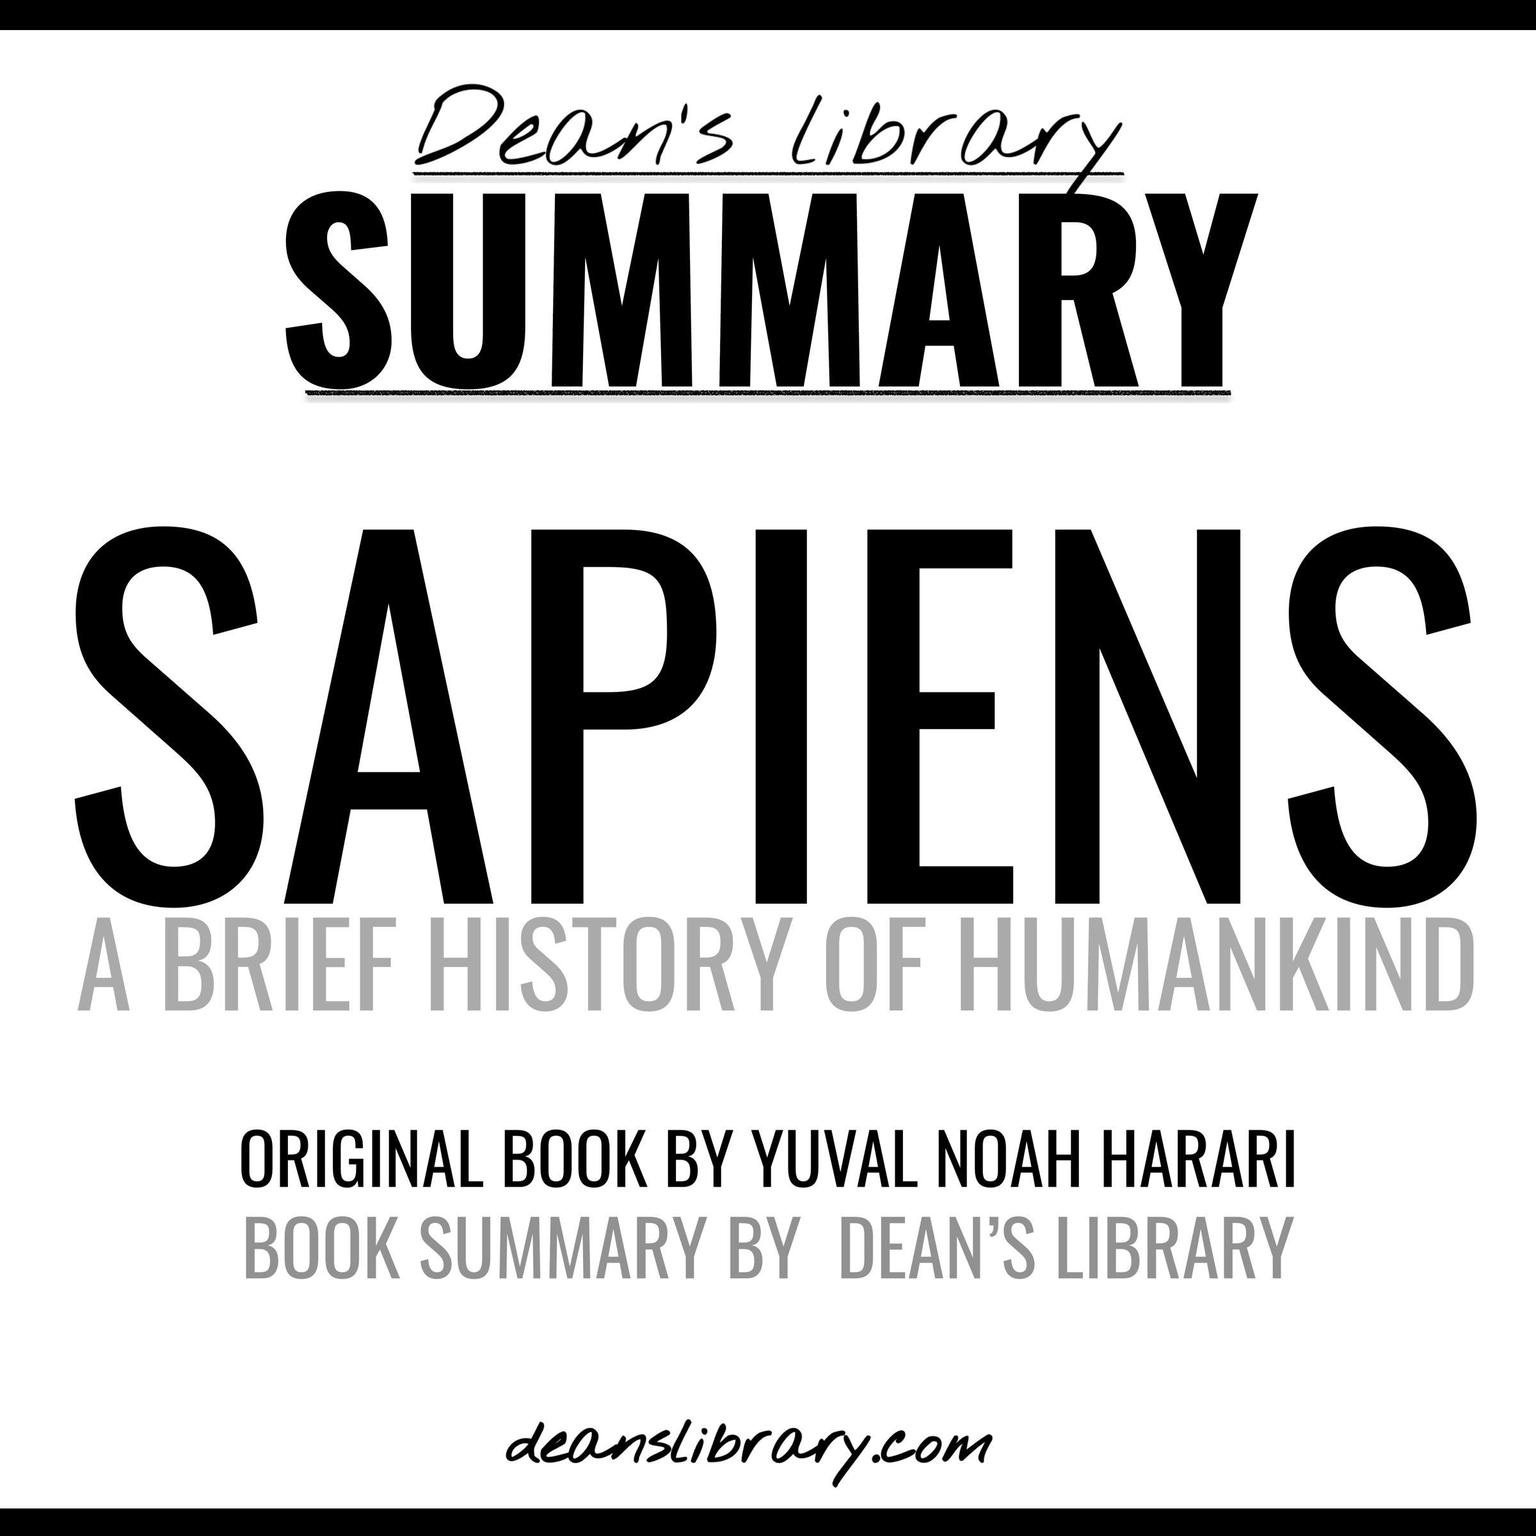 Summary: Sapiens by Yuval Noah Harari Audiobook, by Dean's Library